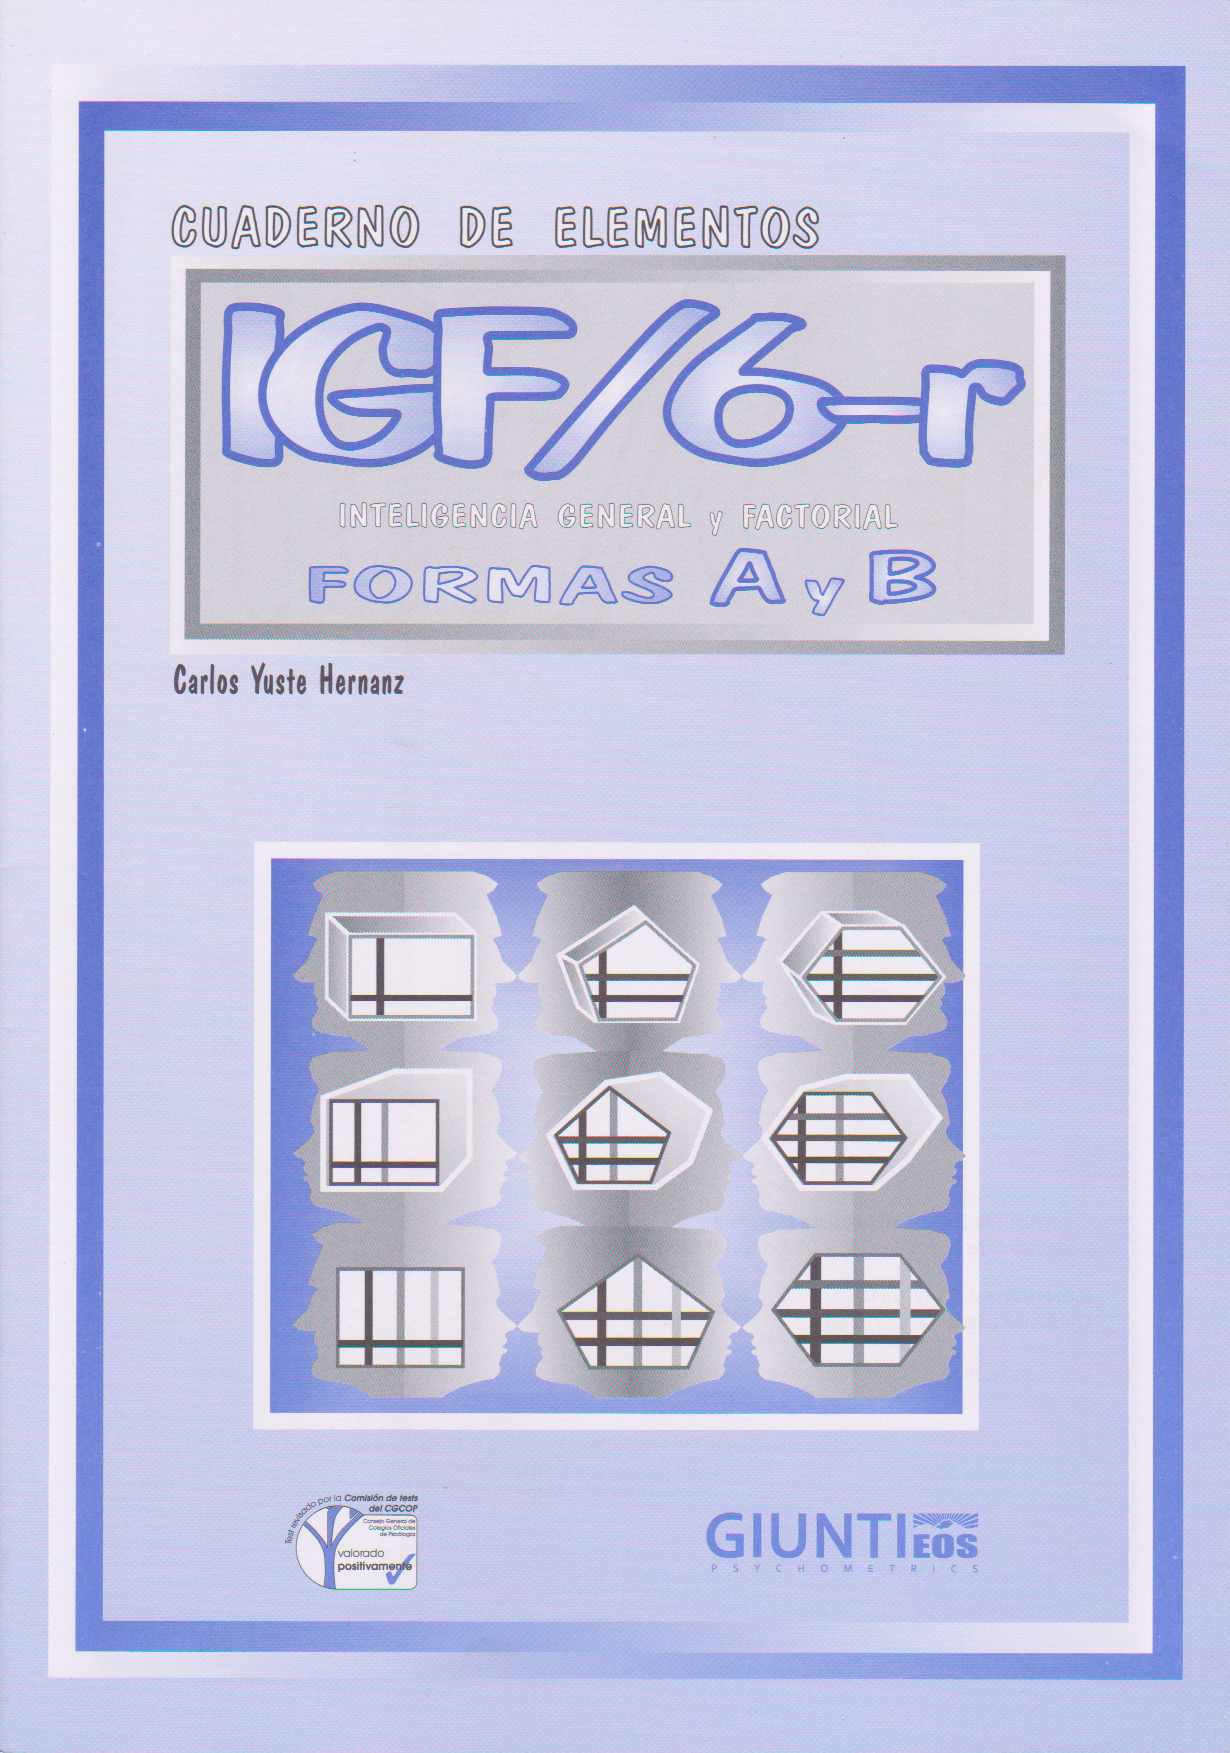 CuadernoElementos-IGF-6-formasAyB